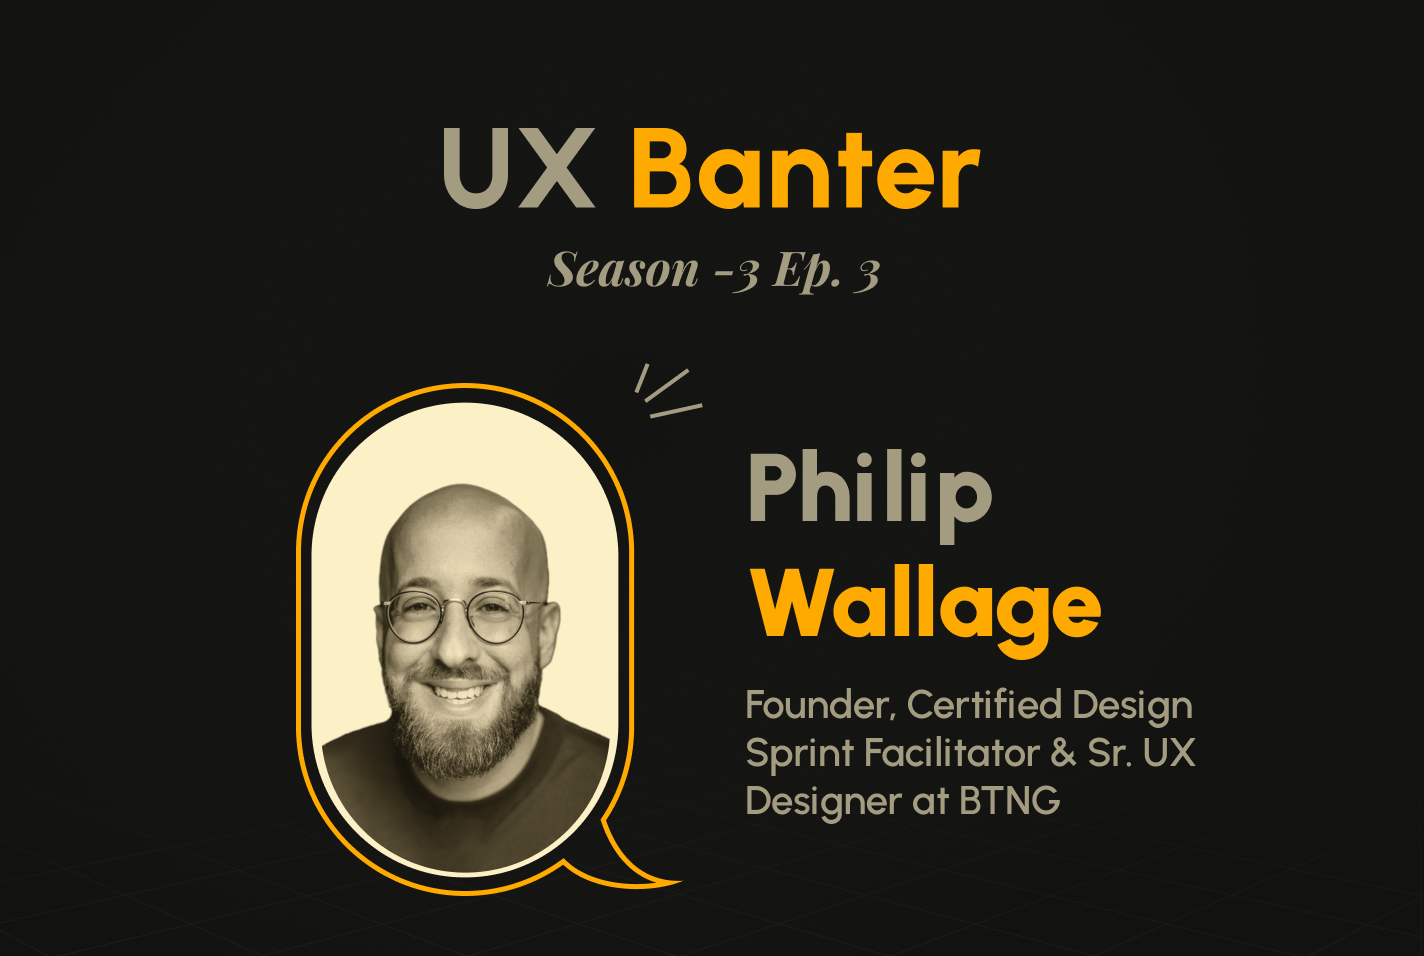 UX Banter Season 3: Episode 3 with Philip Wallage